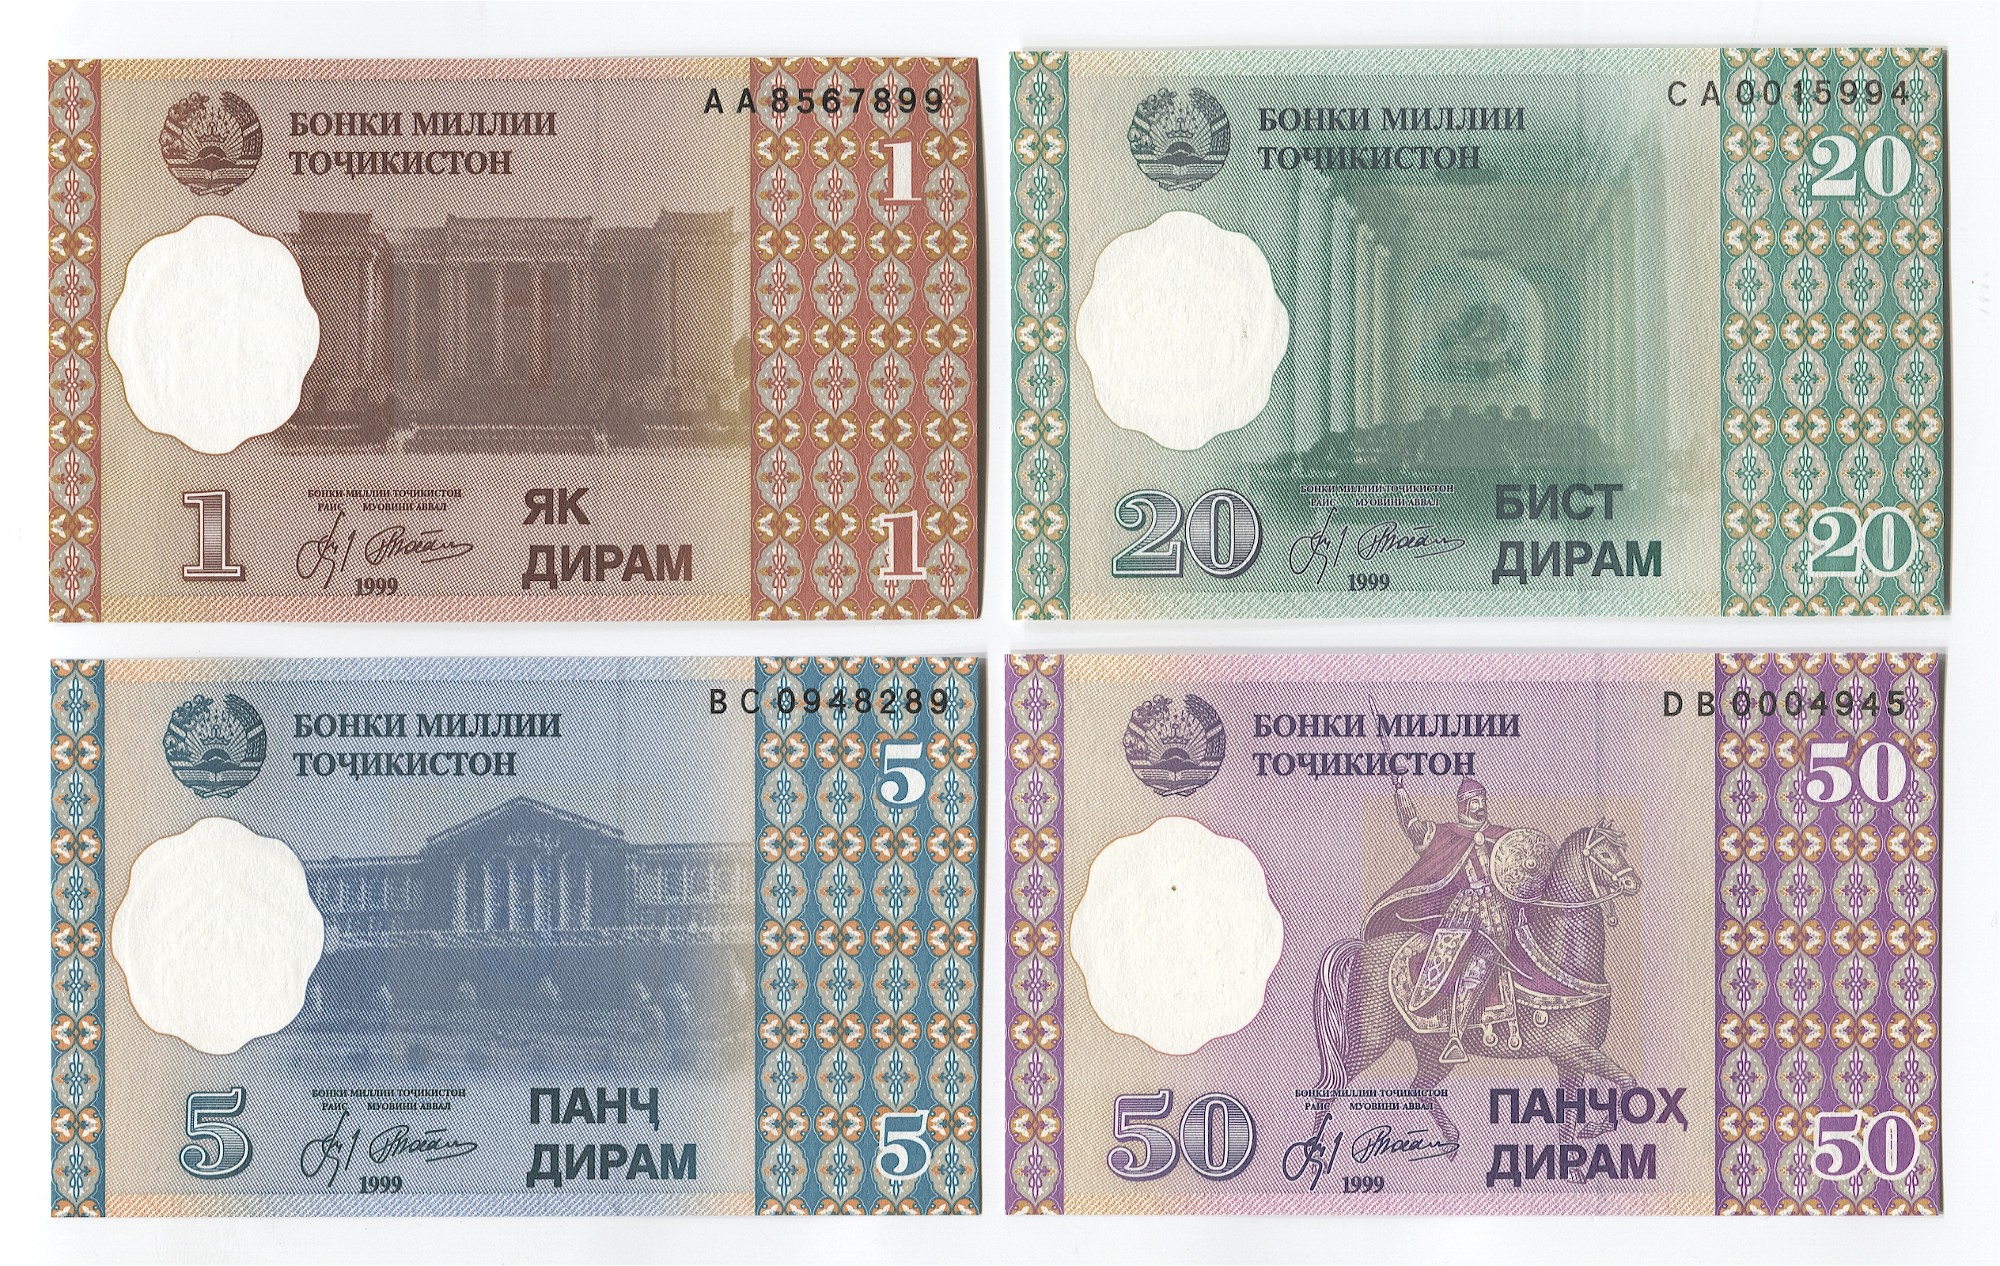 Курс валют точикистон. 50 Дирам 1999 Таджикистана. Таджикистан 20 дирам 1999 год пресс UNC. Банкнота Таджикистан 20 дирам 1999. Купюра Таджикистан 1 дирам 1999.